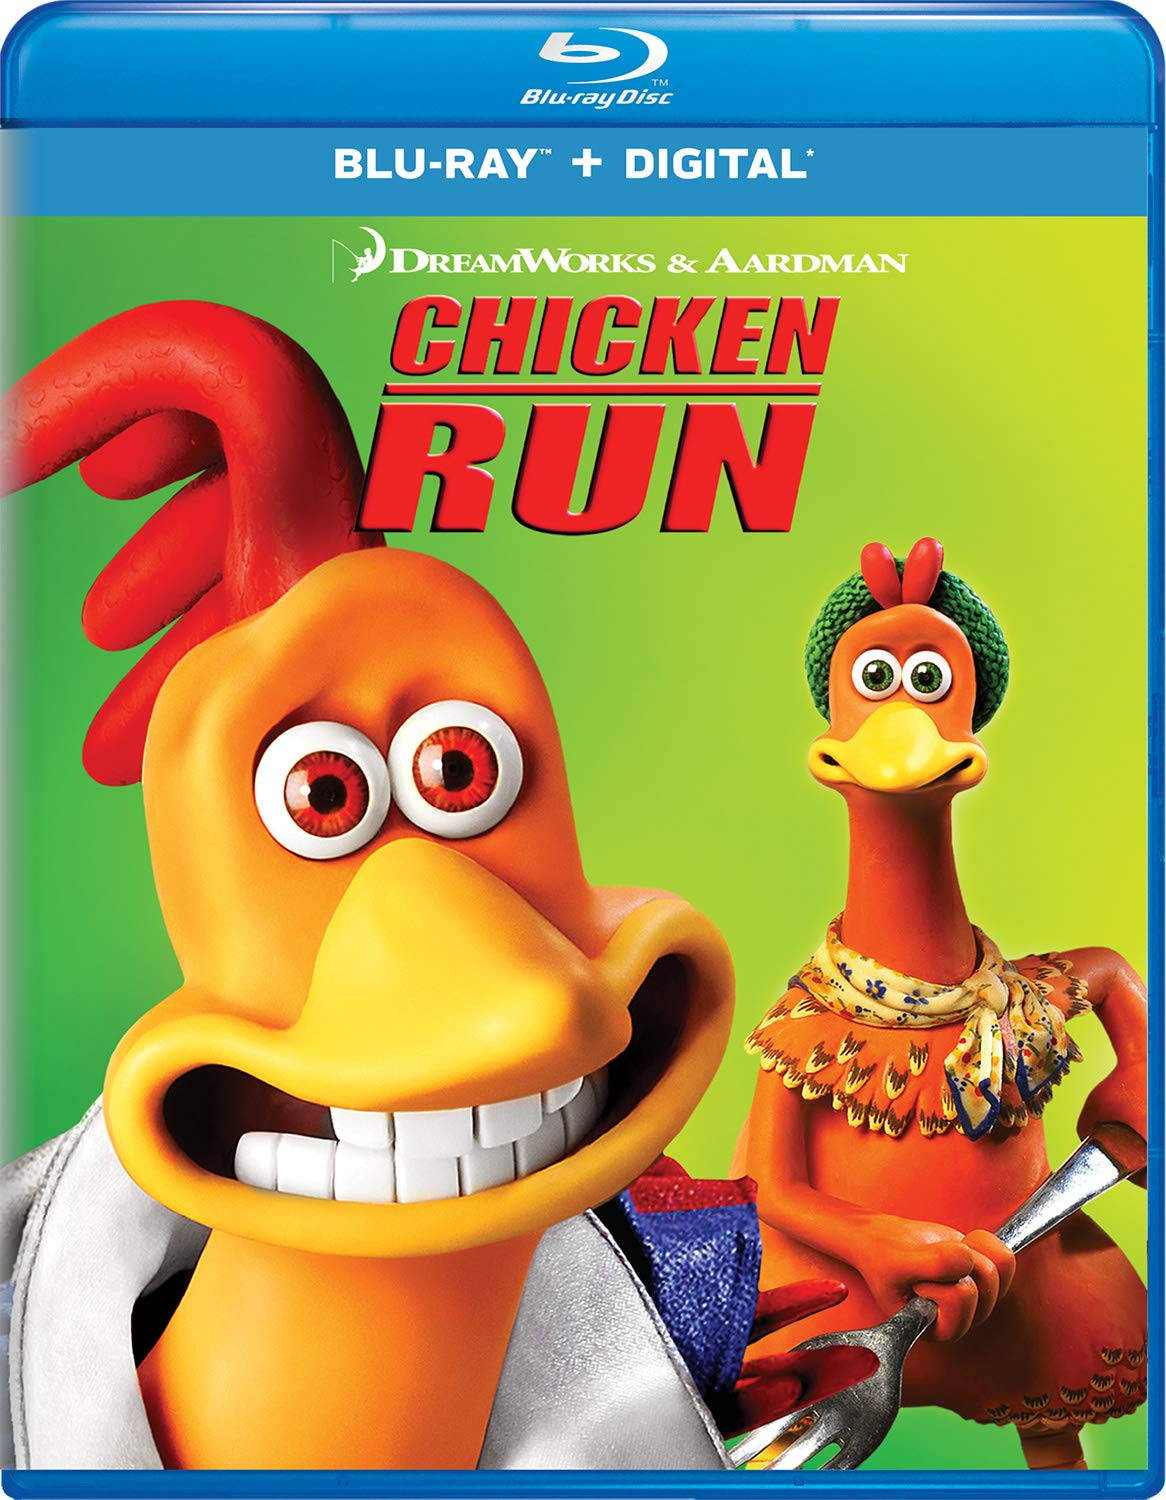 The Chicken Run Blu-ray Disc Cover Wallpaper